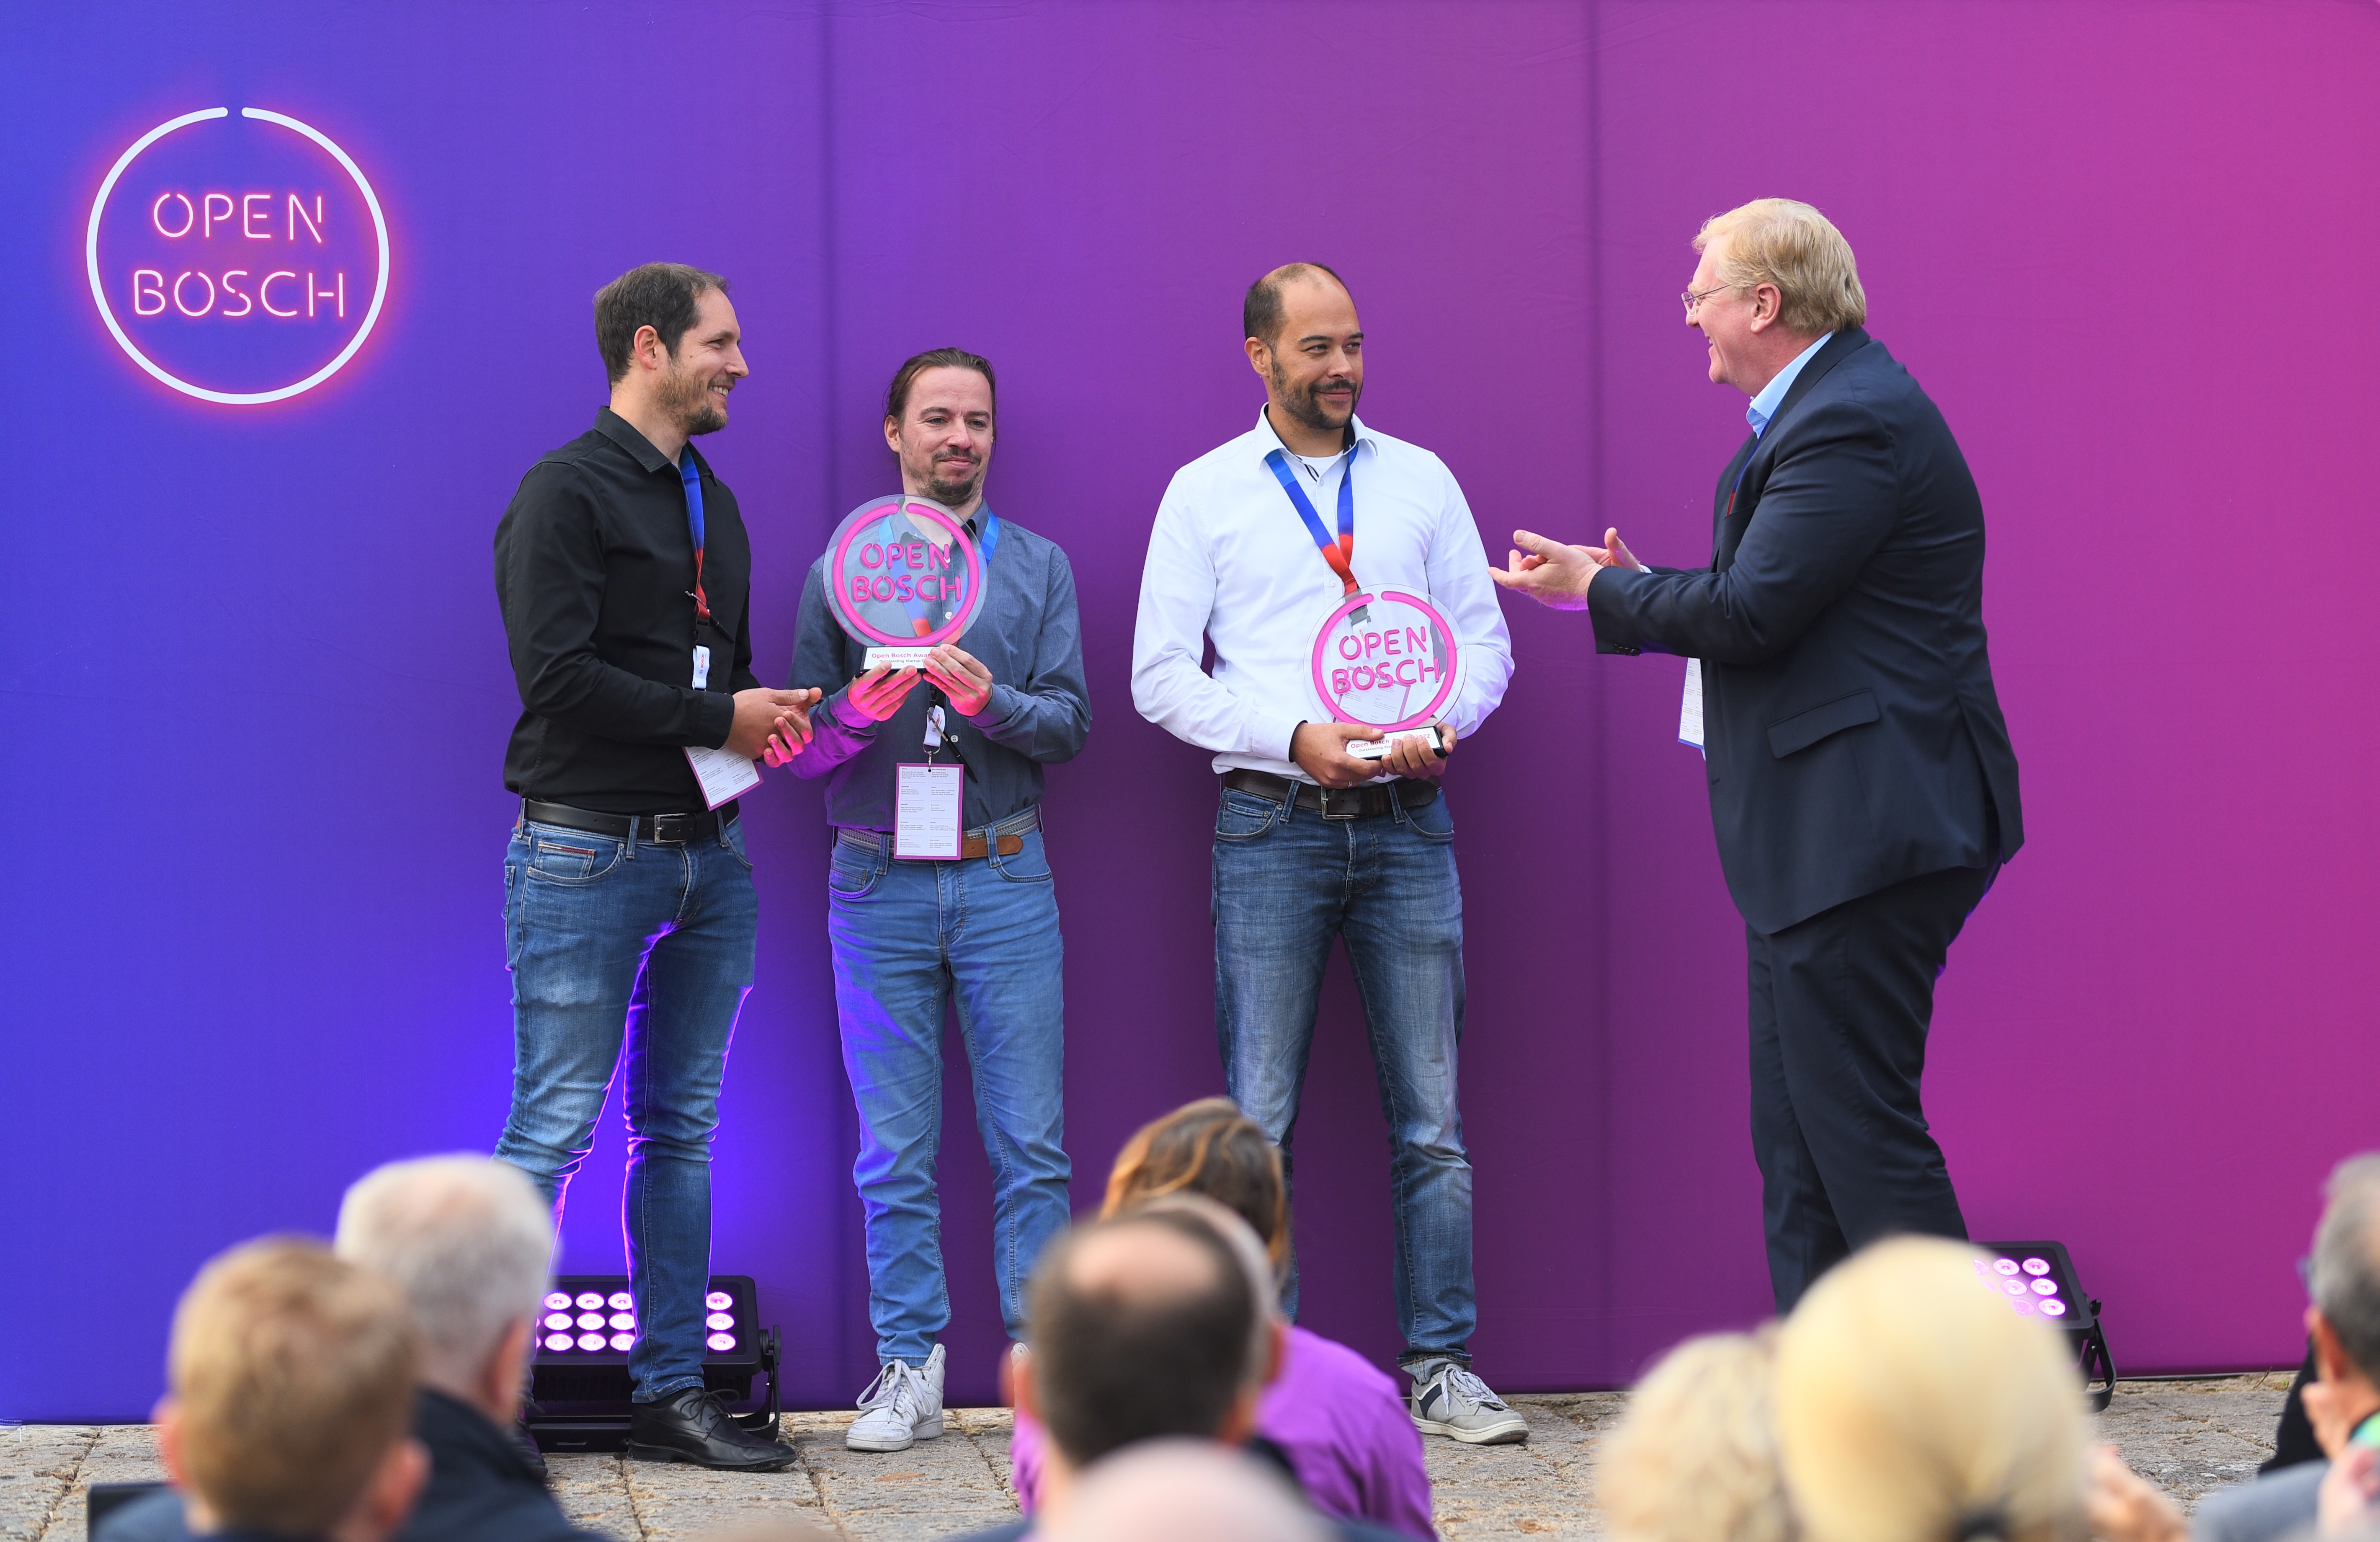 Open Bosch Award 2022 Winner – Philipp Crocoll (COO), Julius Ziegler (CTO) and Henning Lategahn (CEO Atlatec); Dr. Stefan Hartung (Chairman of the Board of Management of Robert Bosch GmbH)